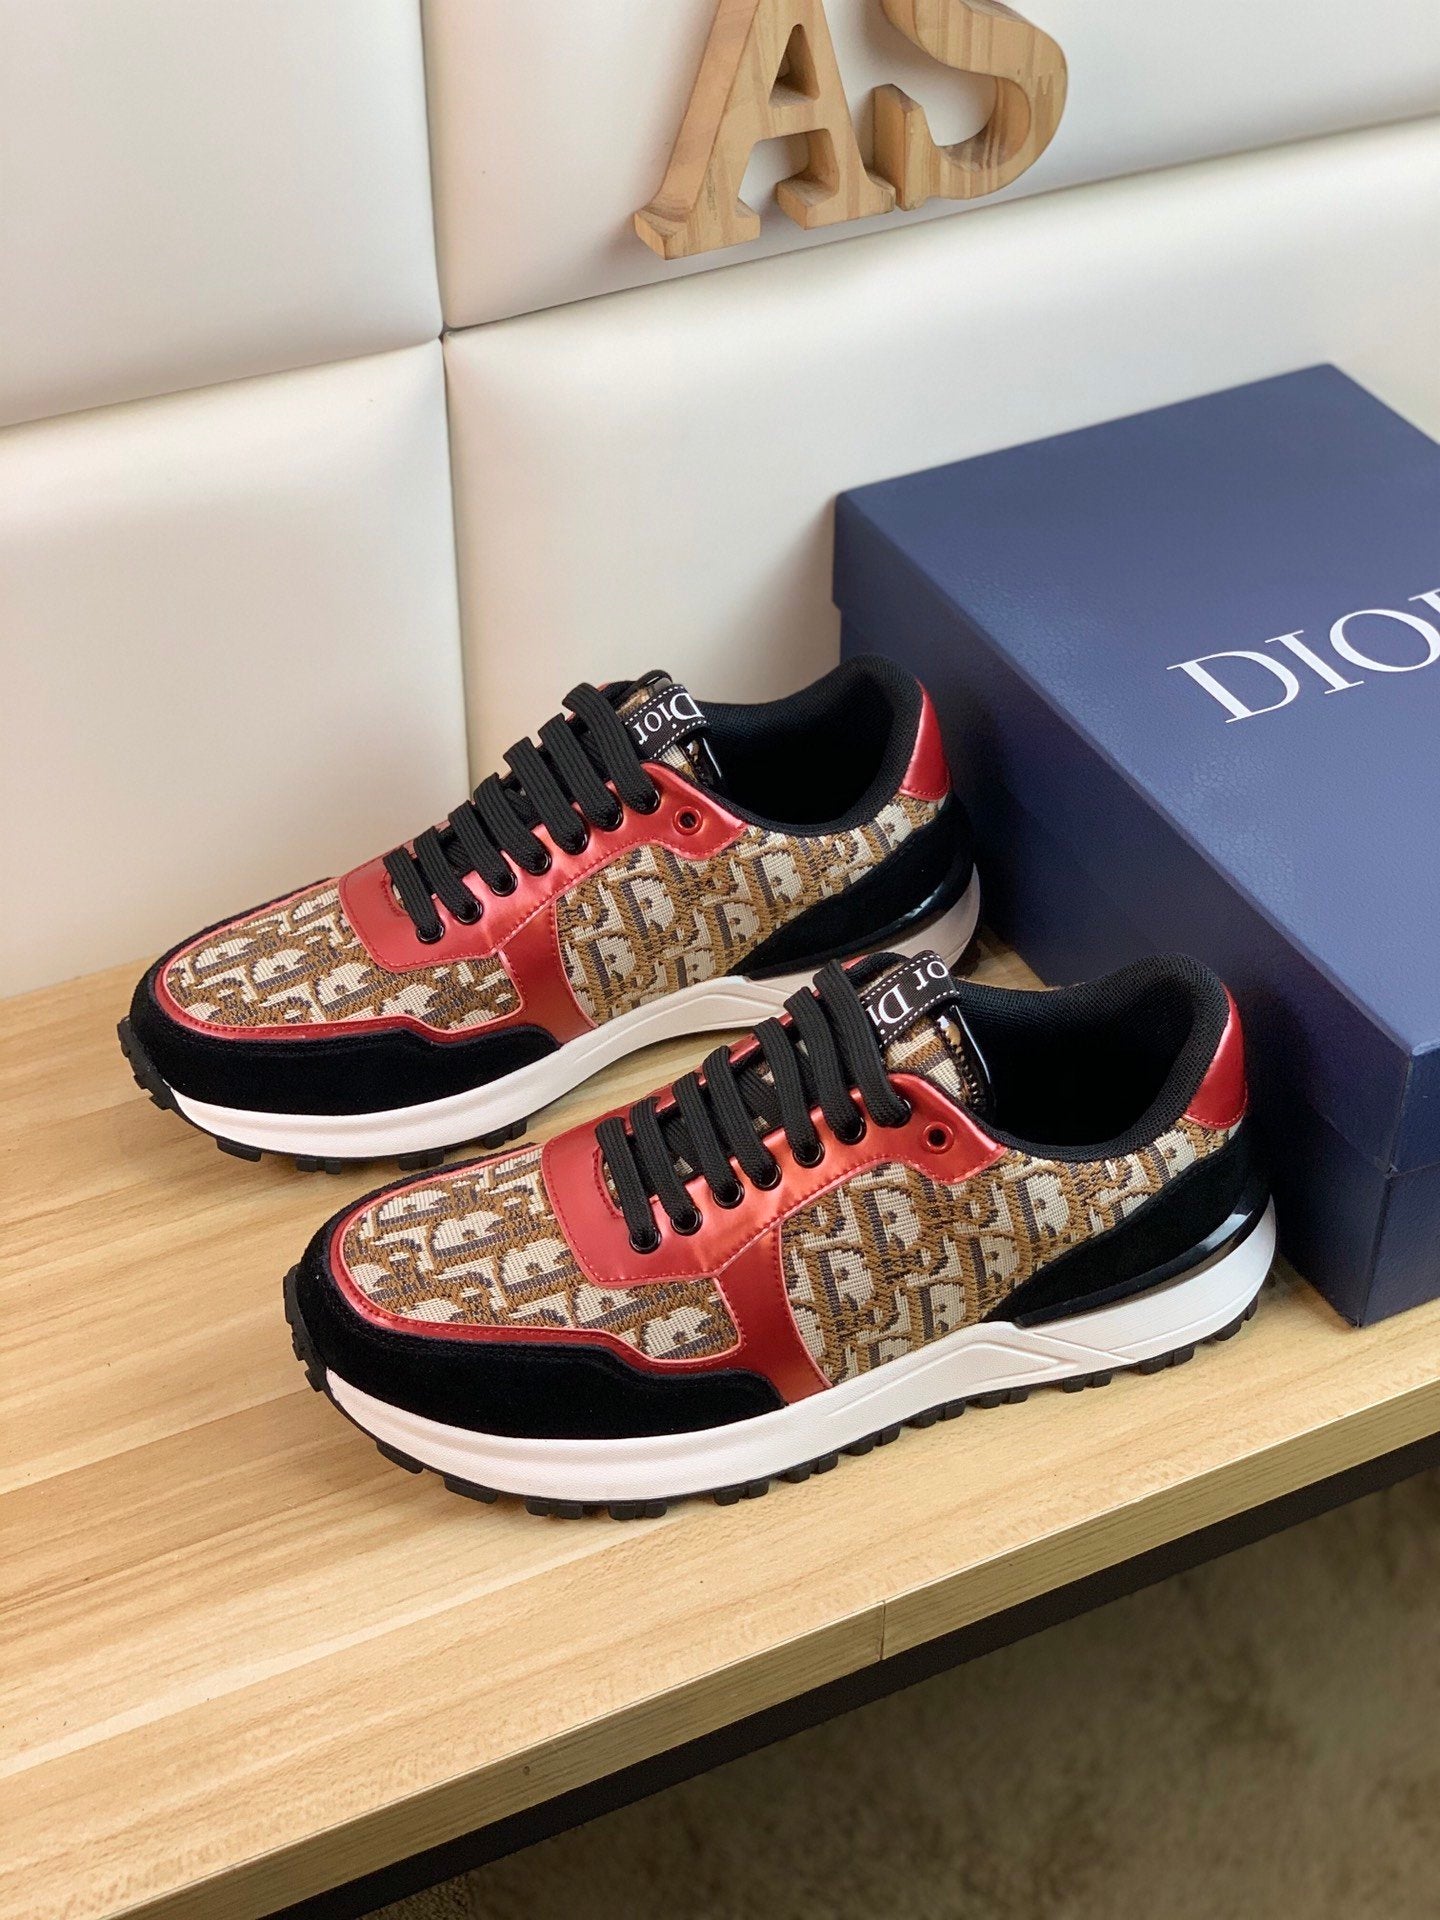 Dior Men's 2021 NEW ARRIVALS Low Top Sneakers Shoes